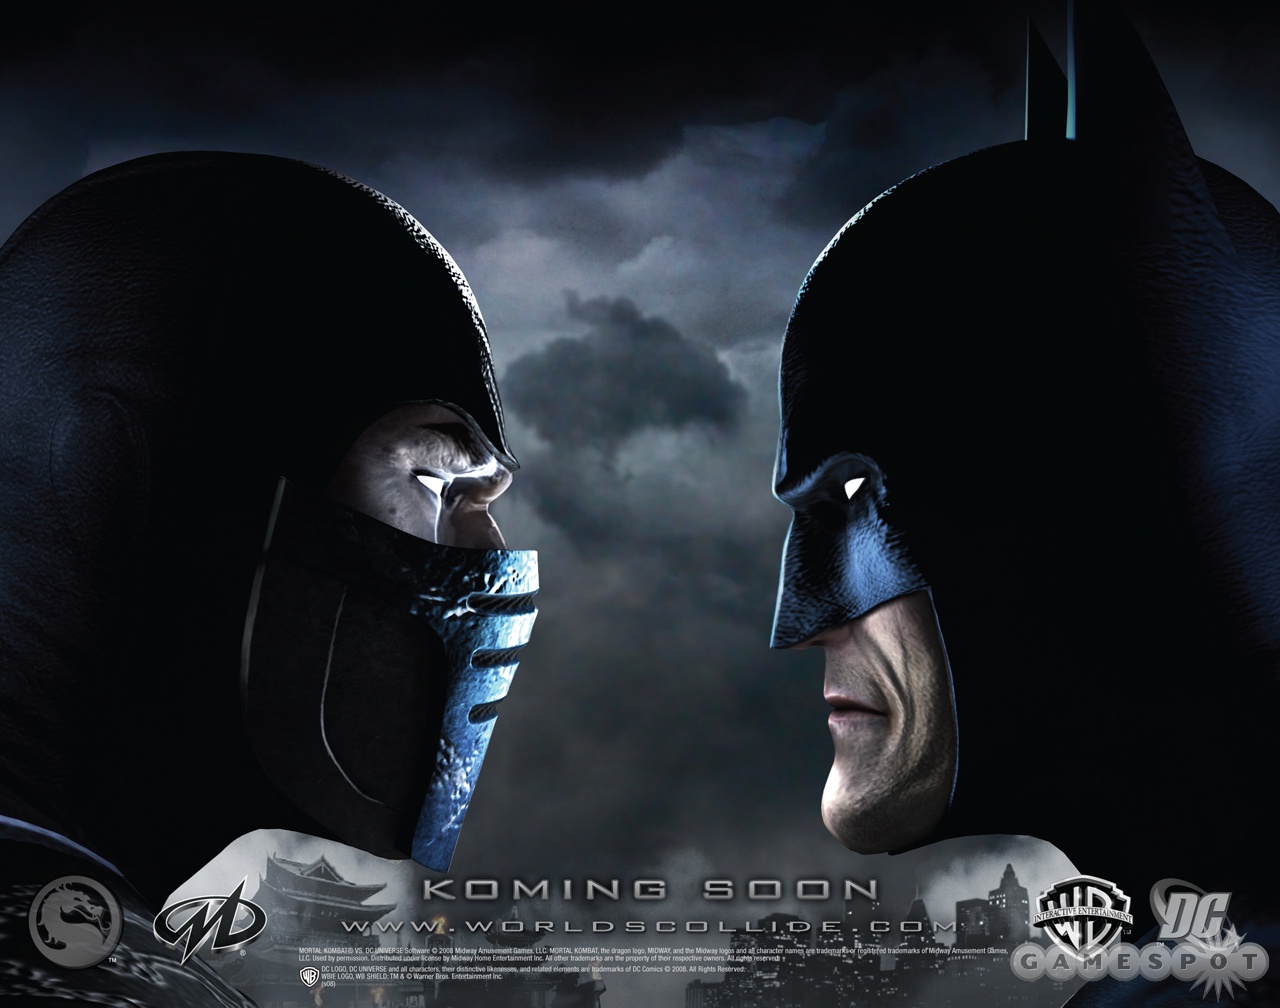 Sub-Zero versus the Dark Knight? It'll happen in Mortal Kombat vs. DC Universe.